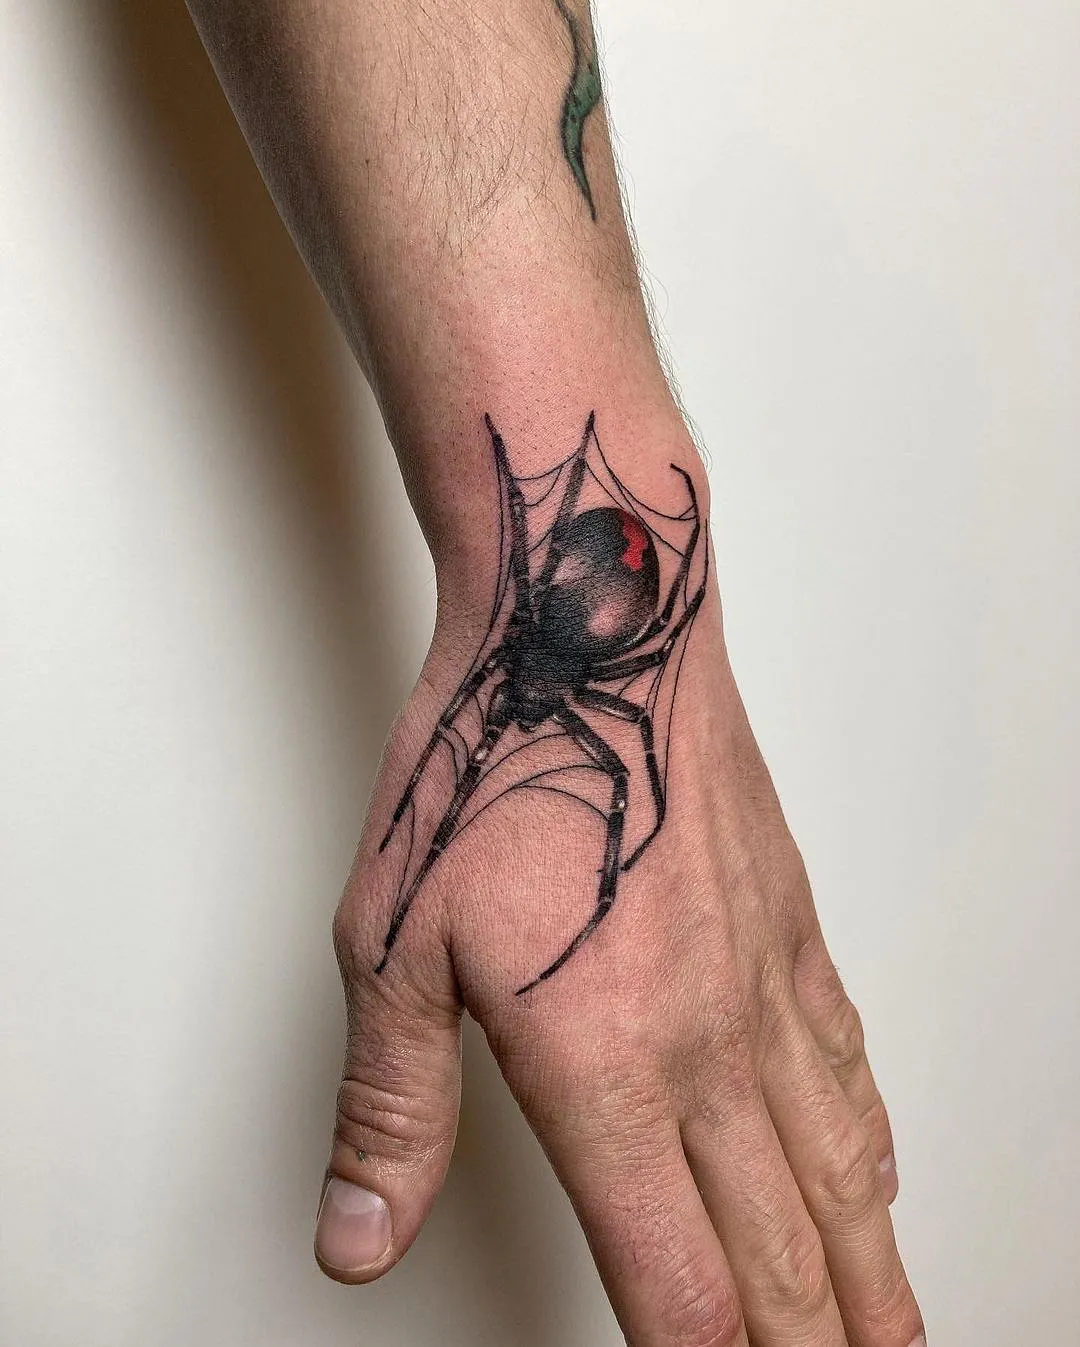 Black widow spider tattoo 31